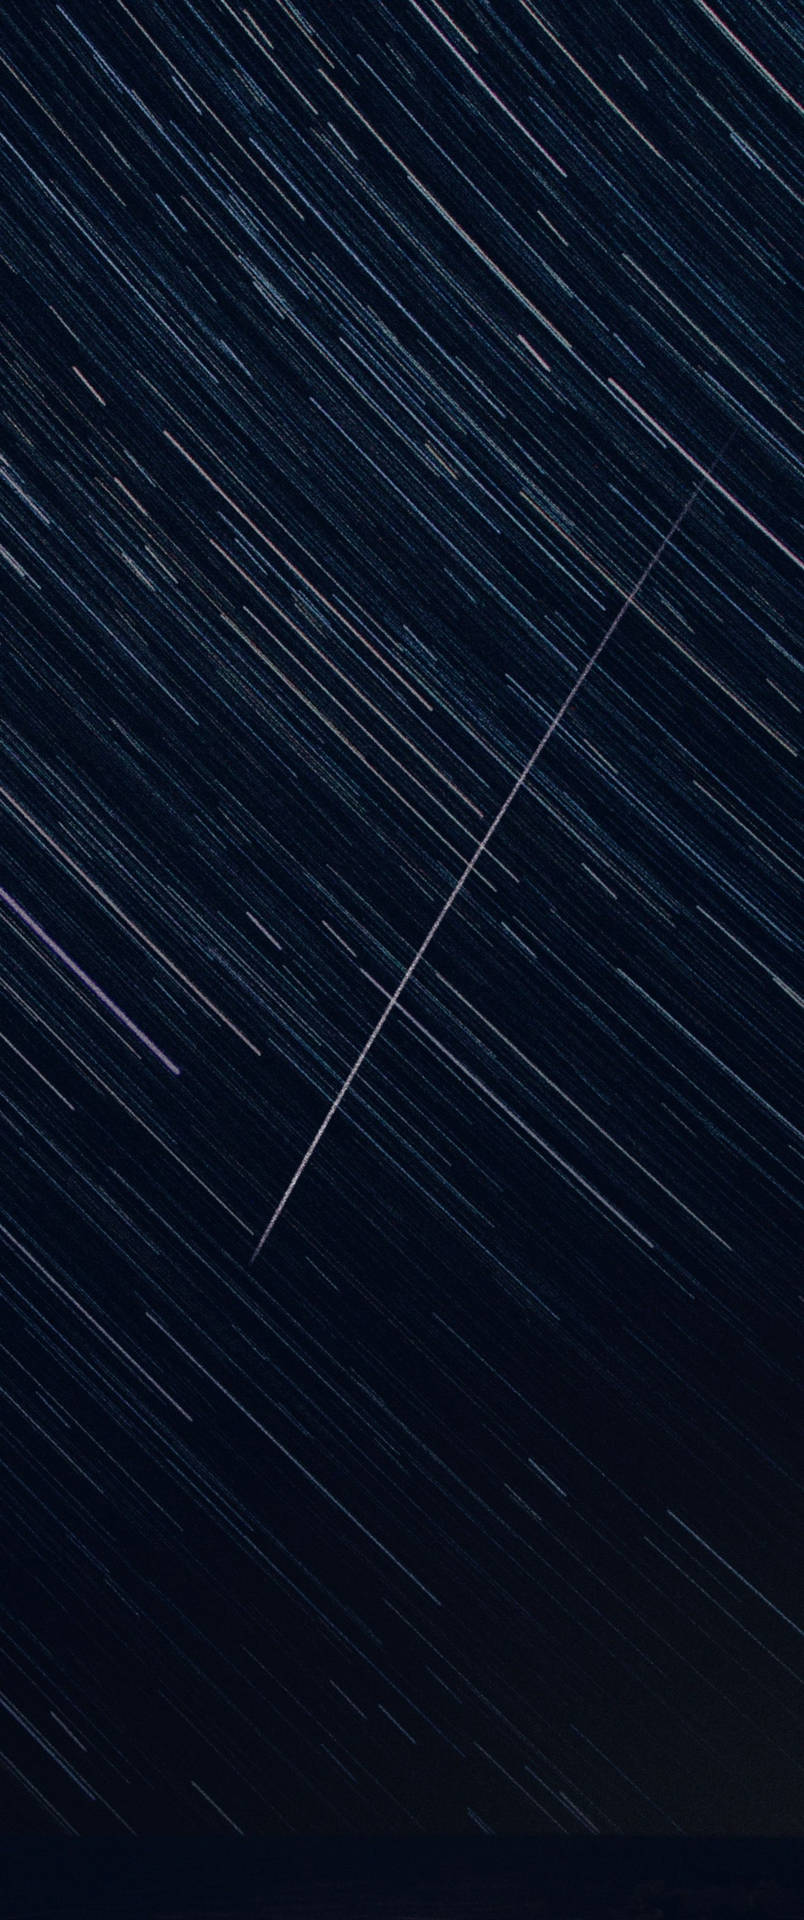 Vertical Shooting Star Wallpaper